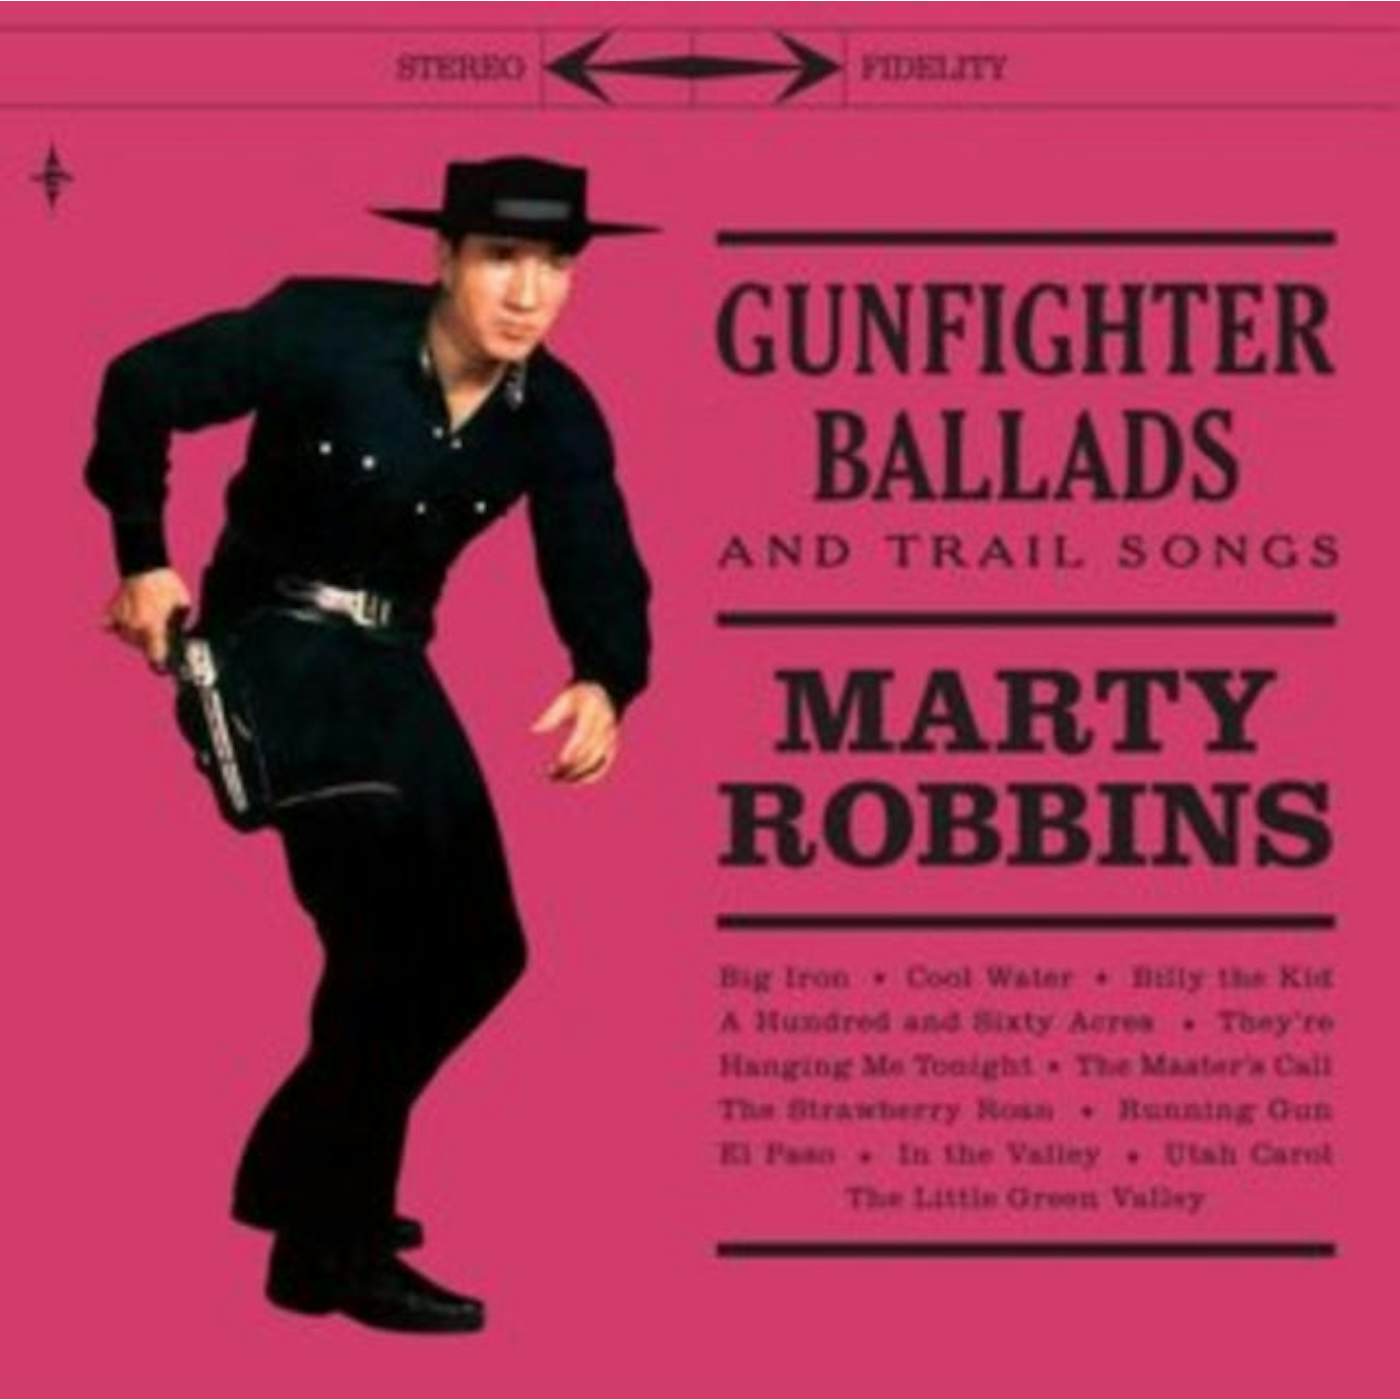 Marty Robbins LP Vinyl Record + 7" - Gunfighter Ballads And Trail Songs + ( Bonus Single, Ballad Of The Alamo)